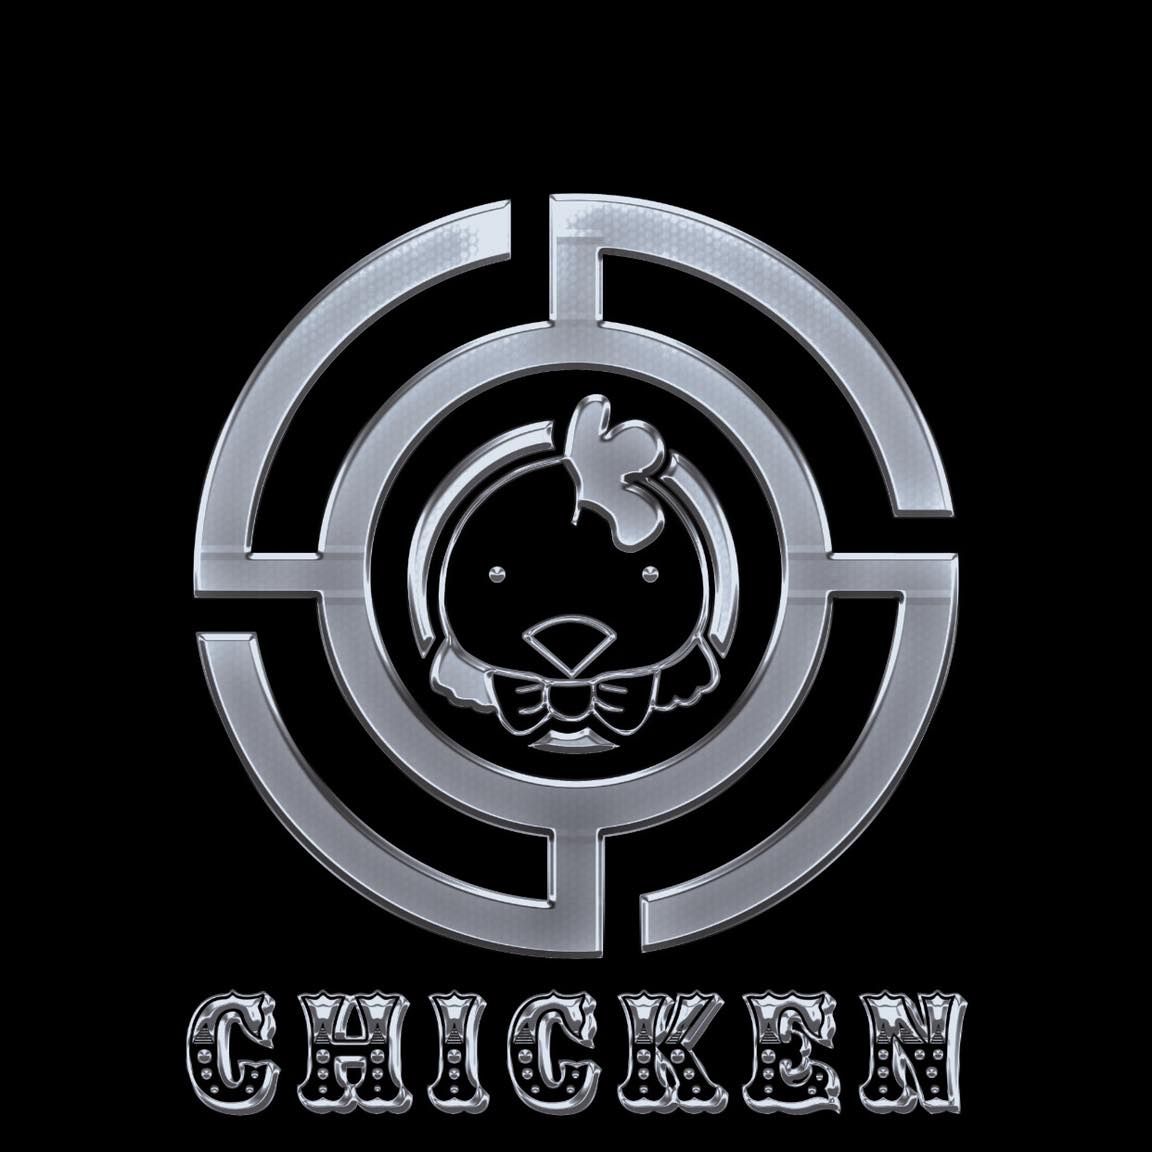 Skinuti Sợ Lắm 2021 - Chicken X Redmoon 2k Remix